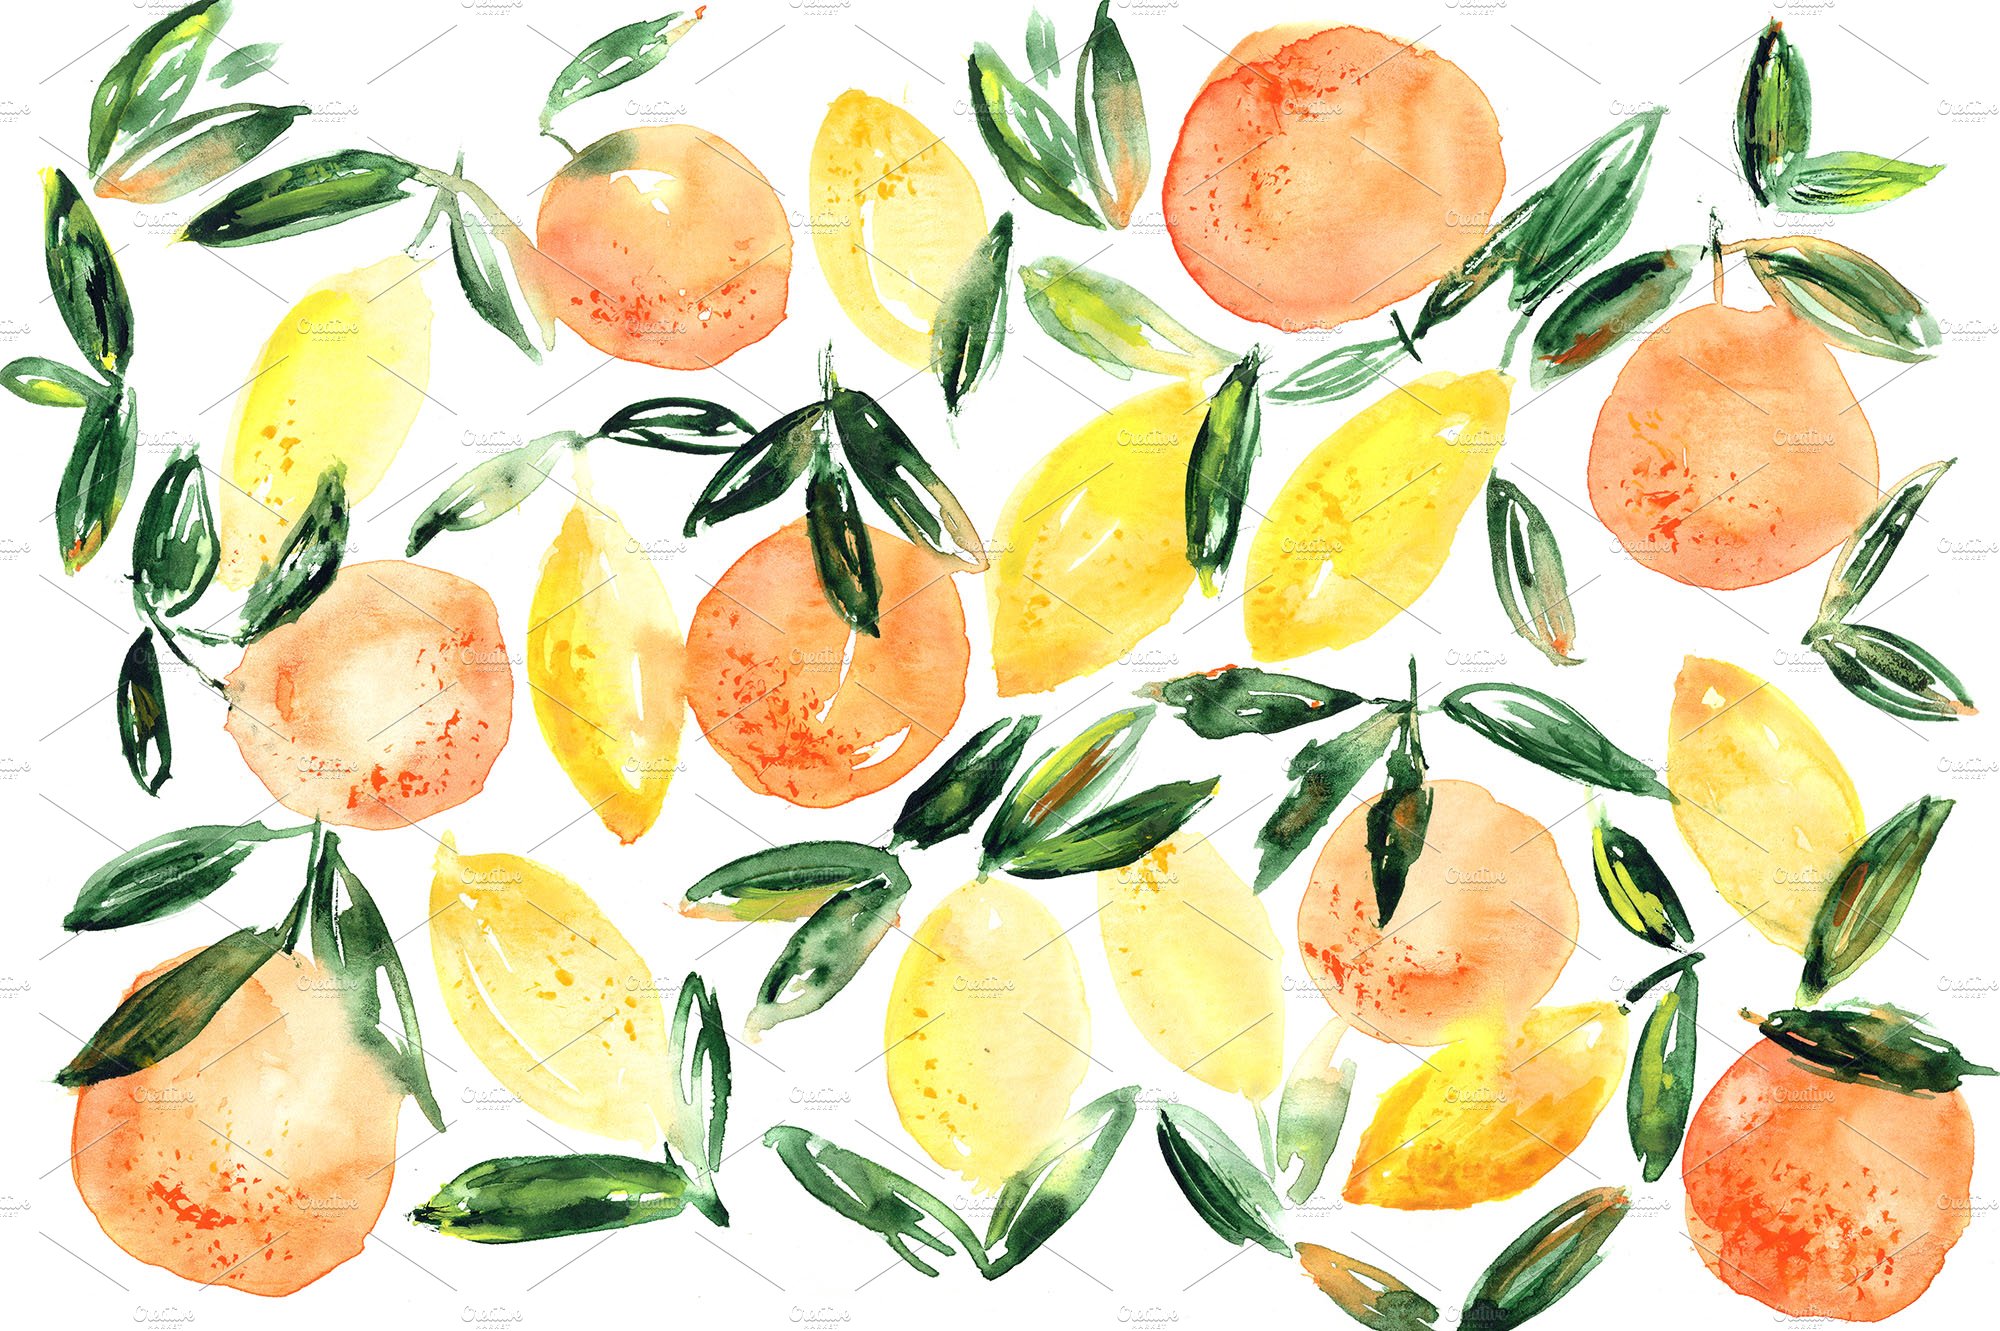 Watercolor orange-lemon art/pattern cover image.